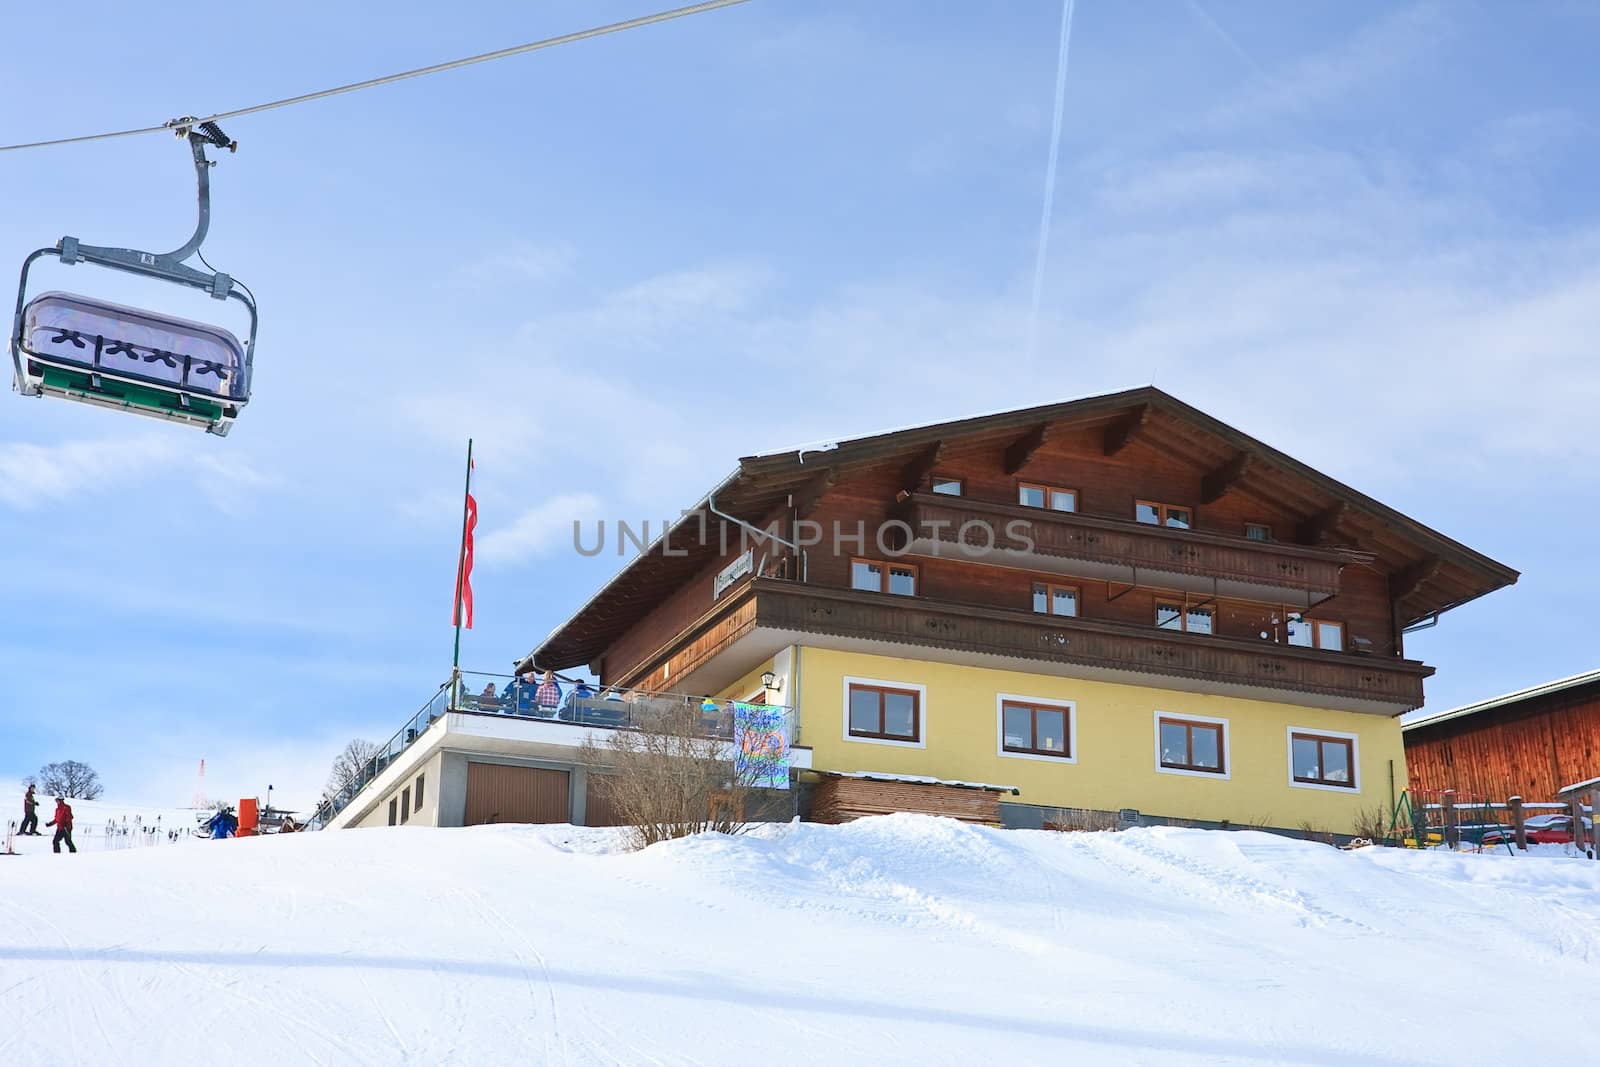 Ski resort Kaprun - Maiskogel. Austria by nikolpetr